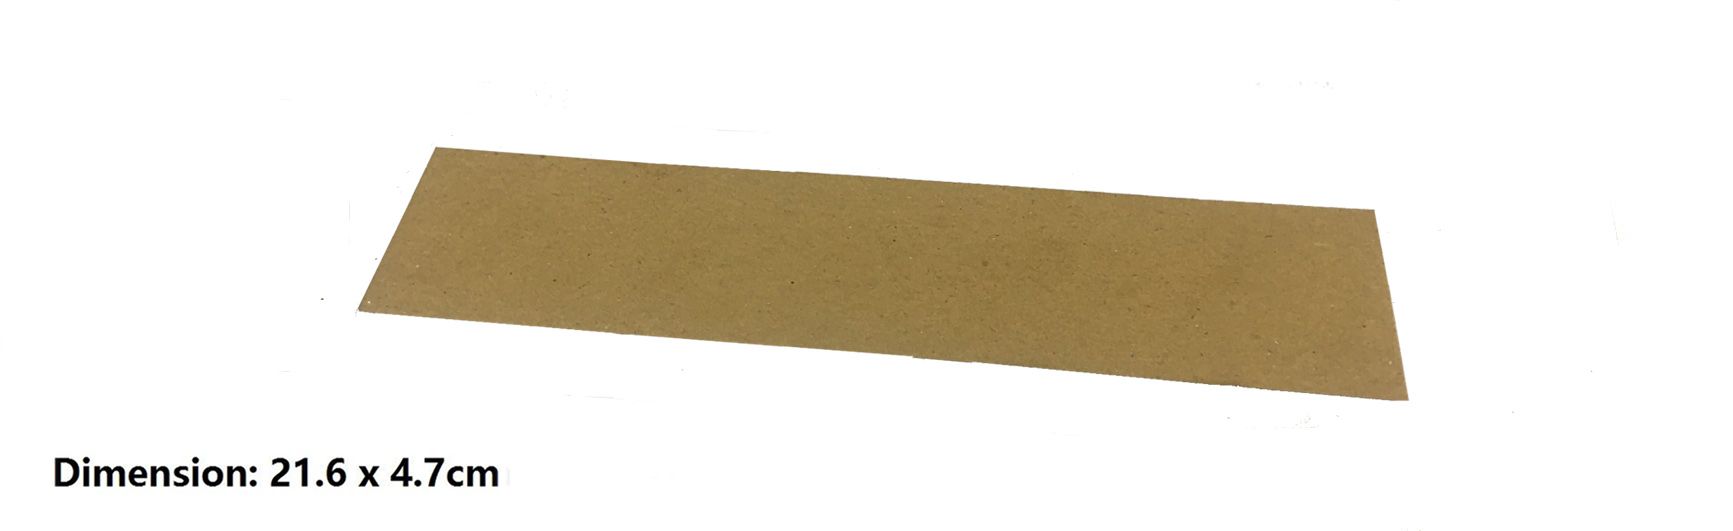 Blank Paper Card (21.6 x 4.7cm)